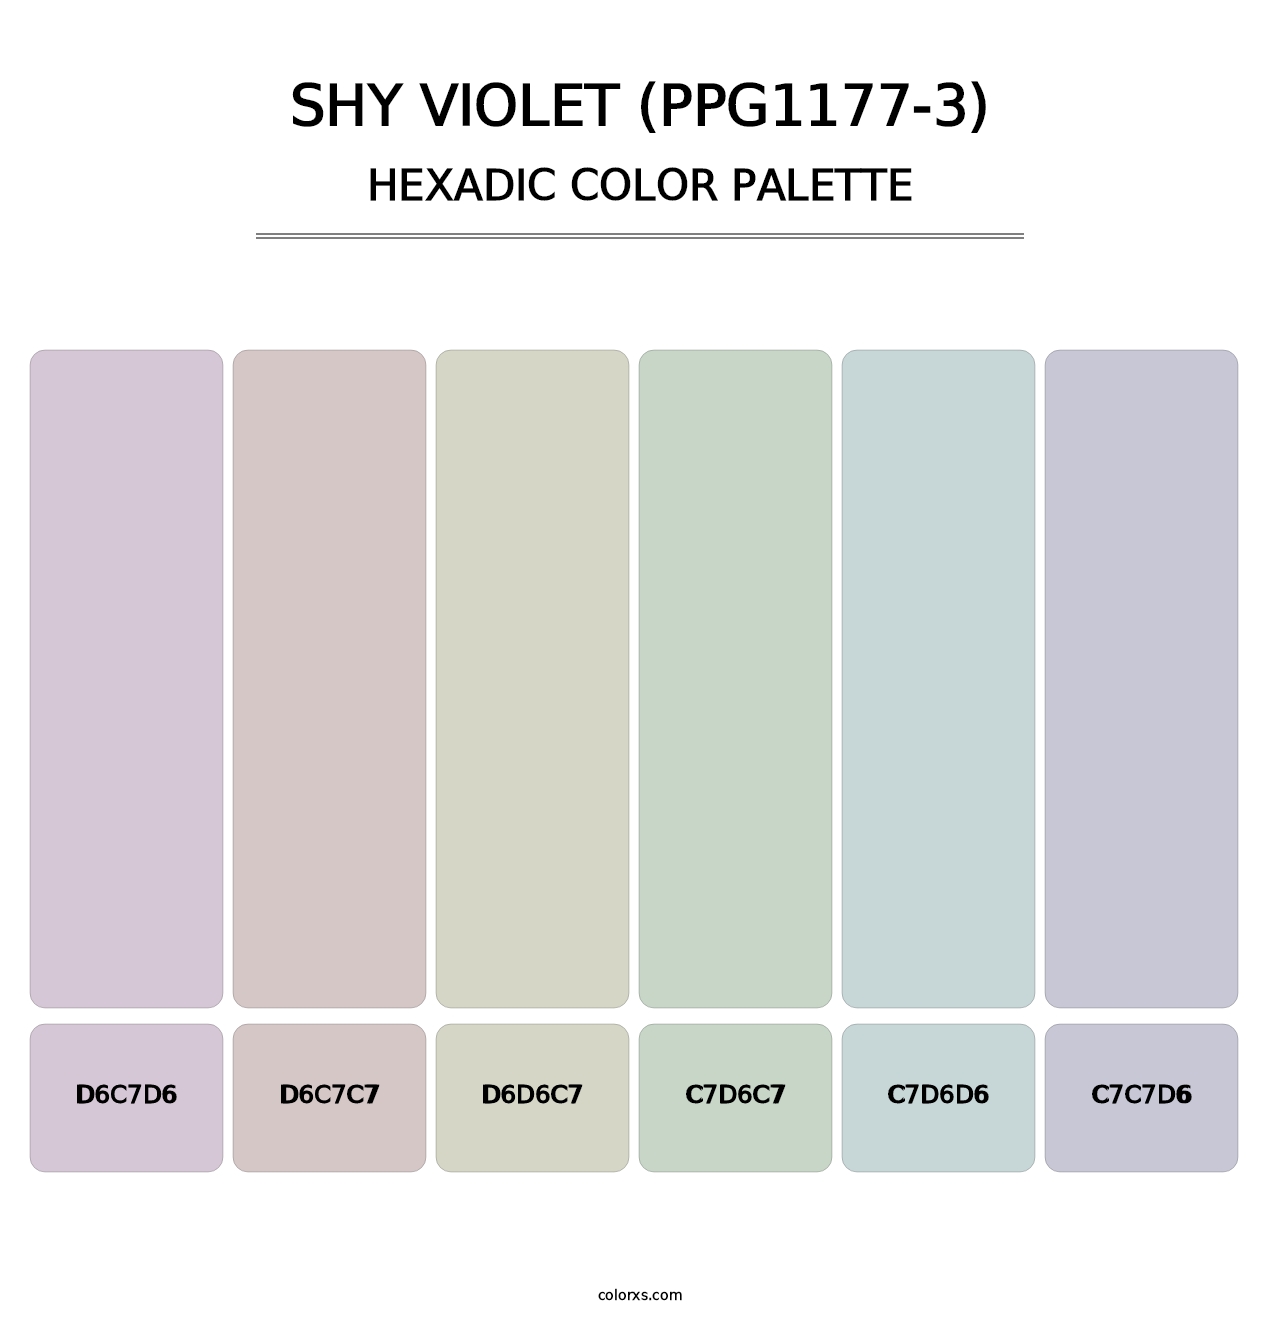 Shy Violet (PPG1177-3) - Hexadic Color Palette